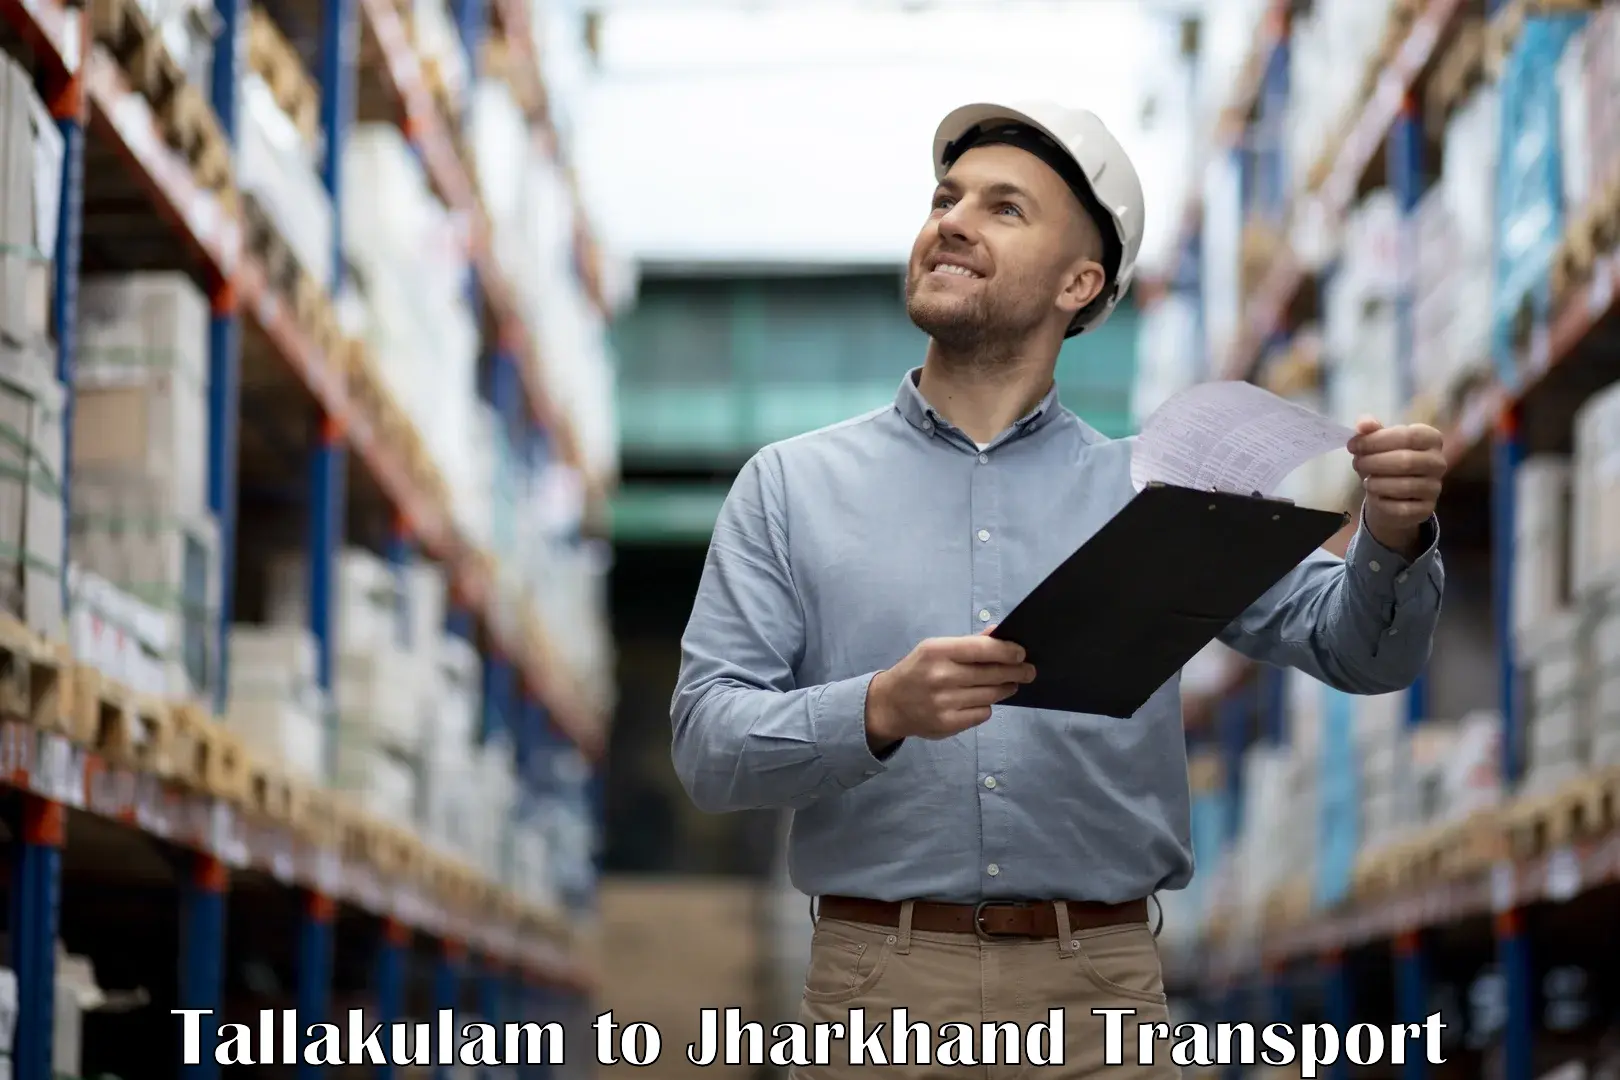 Transport in sharing Tallakulam to Ranchi